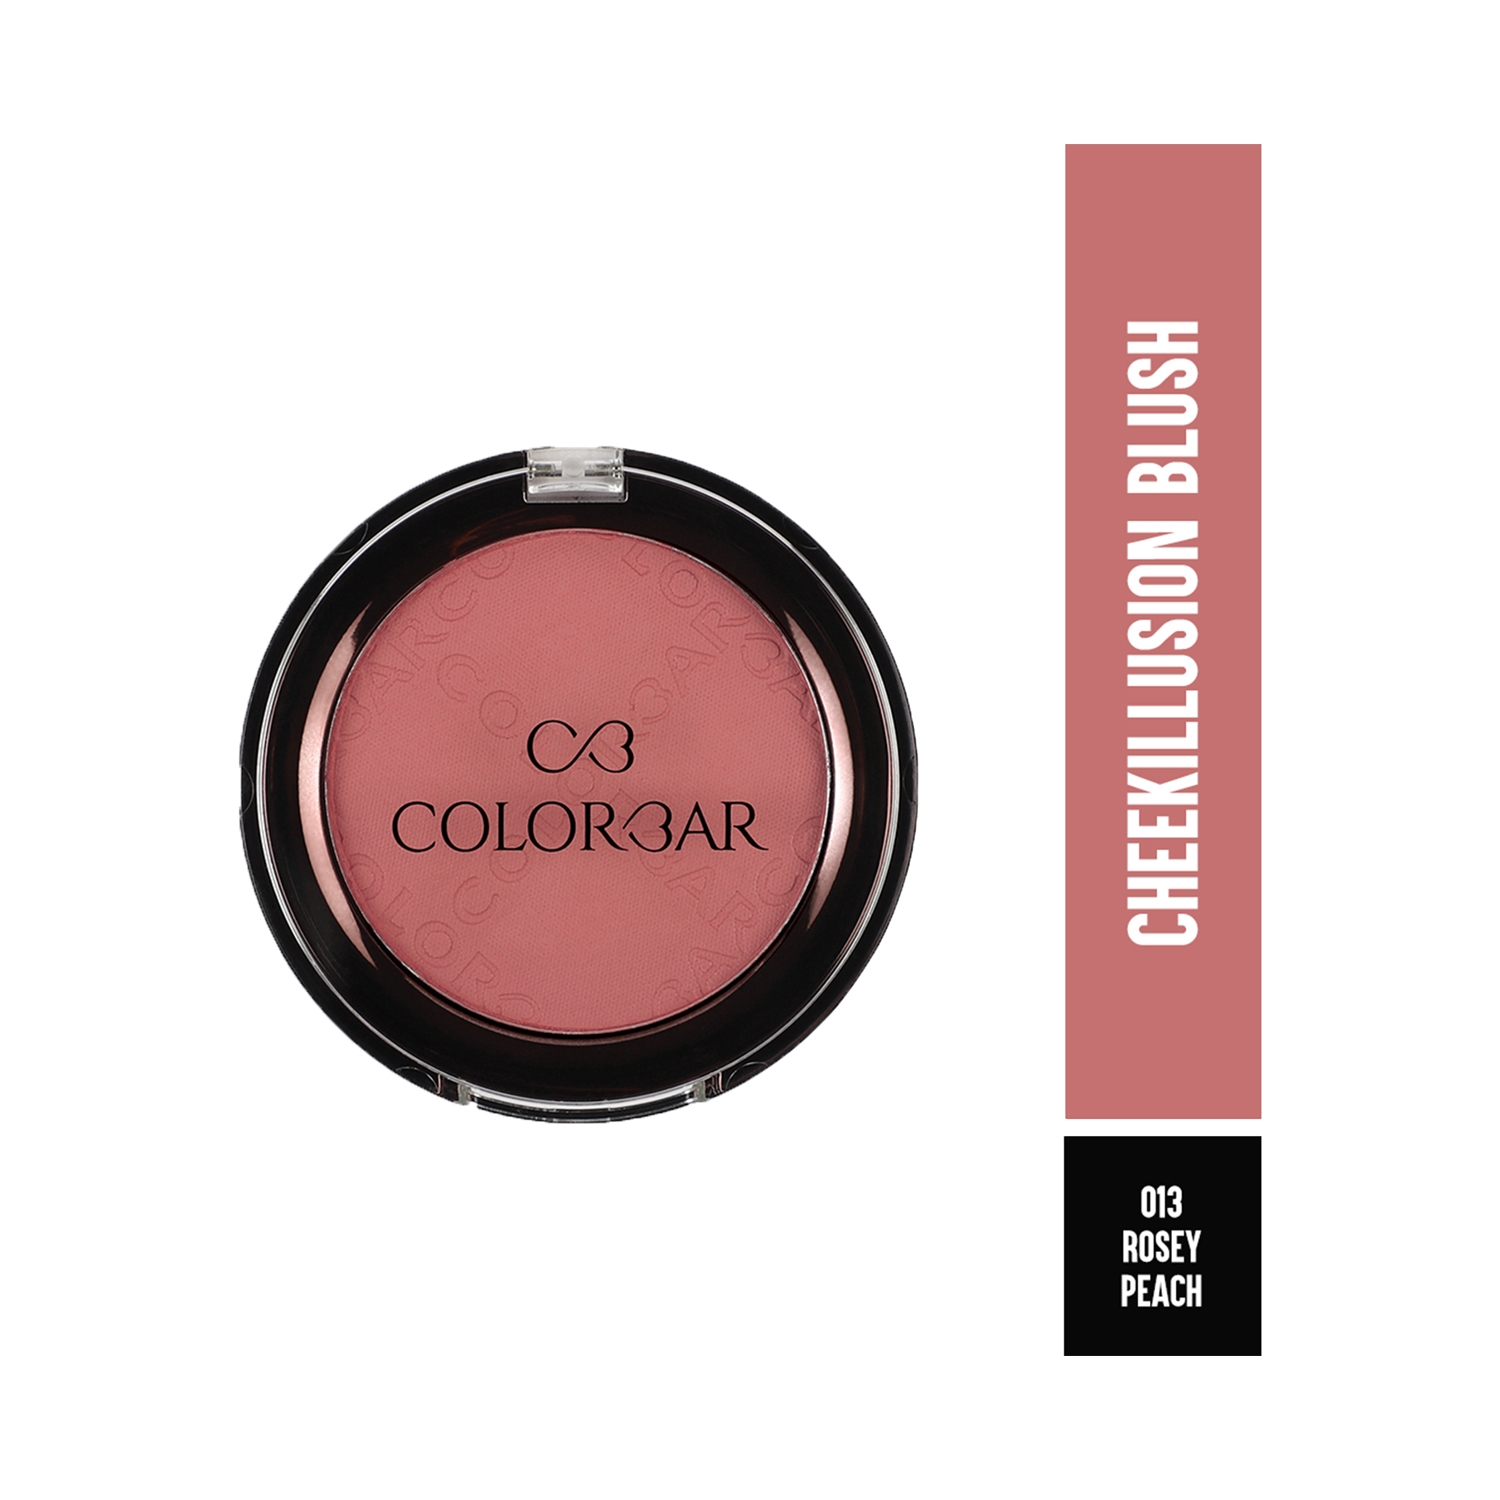 Colorbar | Colorbar Cheekillusion Blush New - 013 Rosey Peach (4g)